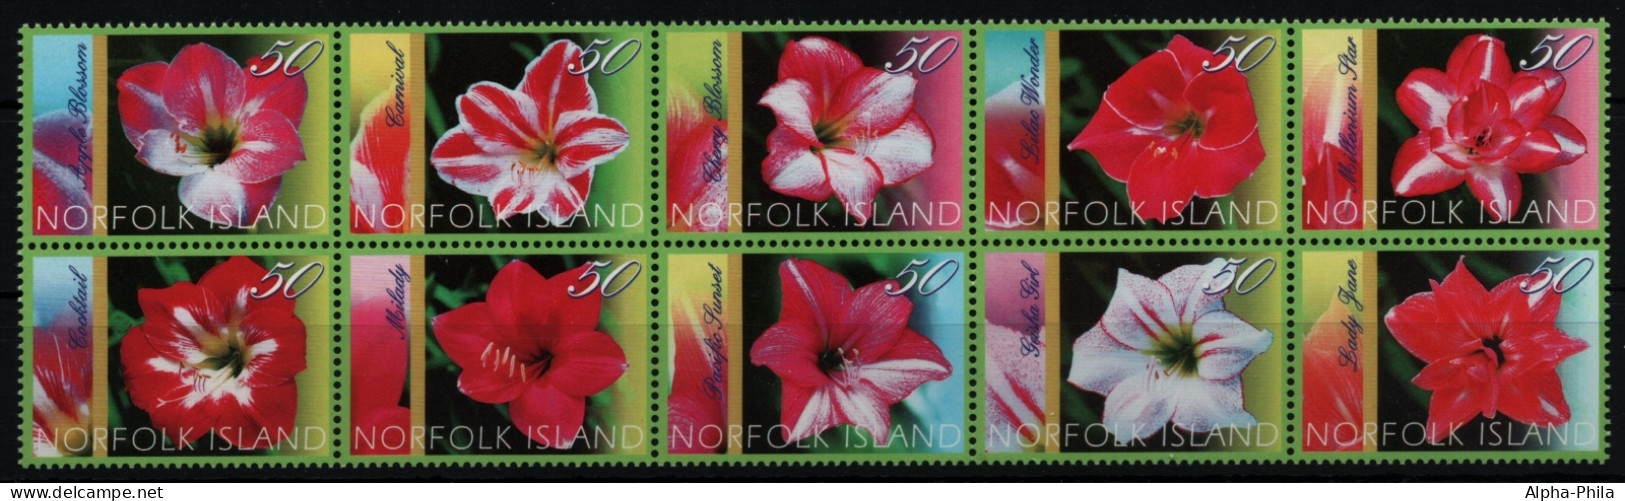 Norfolk-Insel 2004 - Mi-Nr. 874-883 ** - MNH - Blumen / Flowers - Norfolk Island